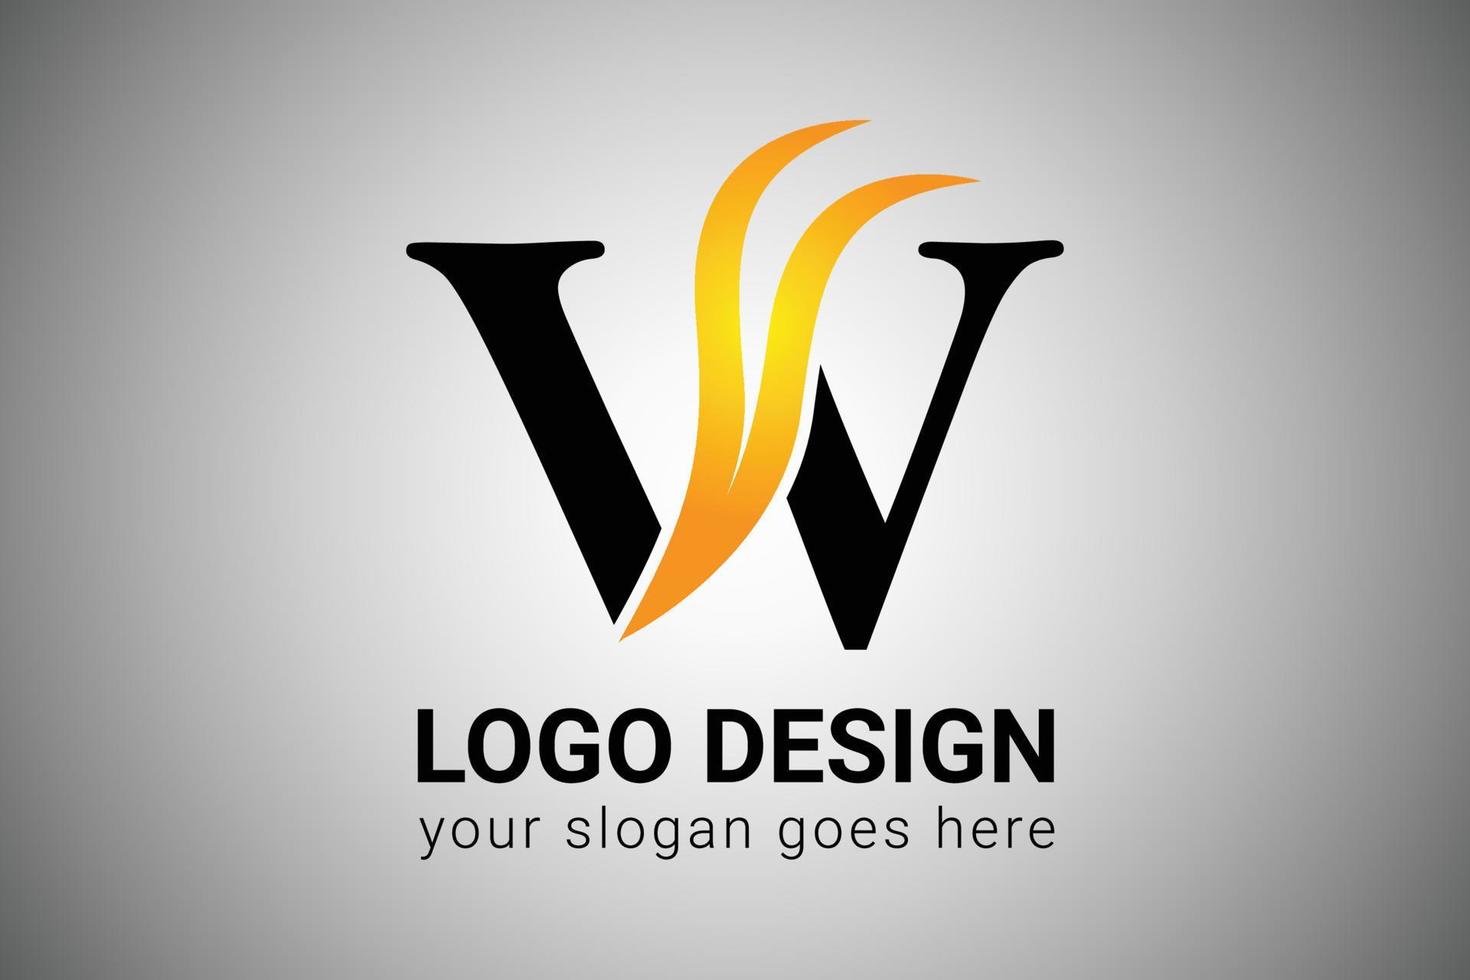 Letter W logo design with yellow and orange Elegant Minimalist Wing. Creative W letter Swoosh Icon Vector Illustration. W Letter Logo Design with Fire Flames and Orange Swoosh Vector Illustration.